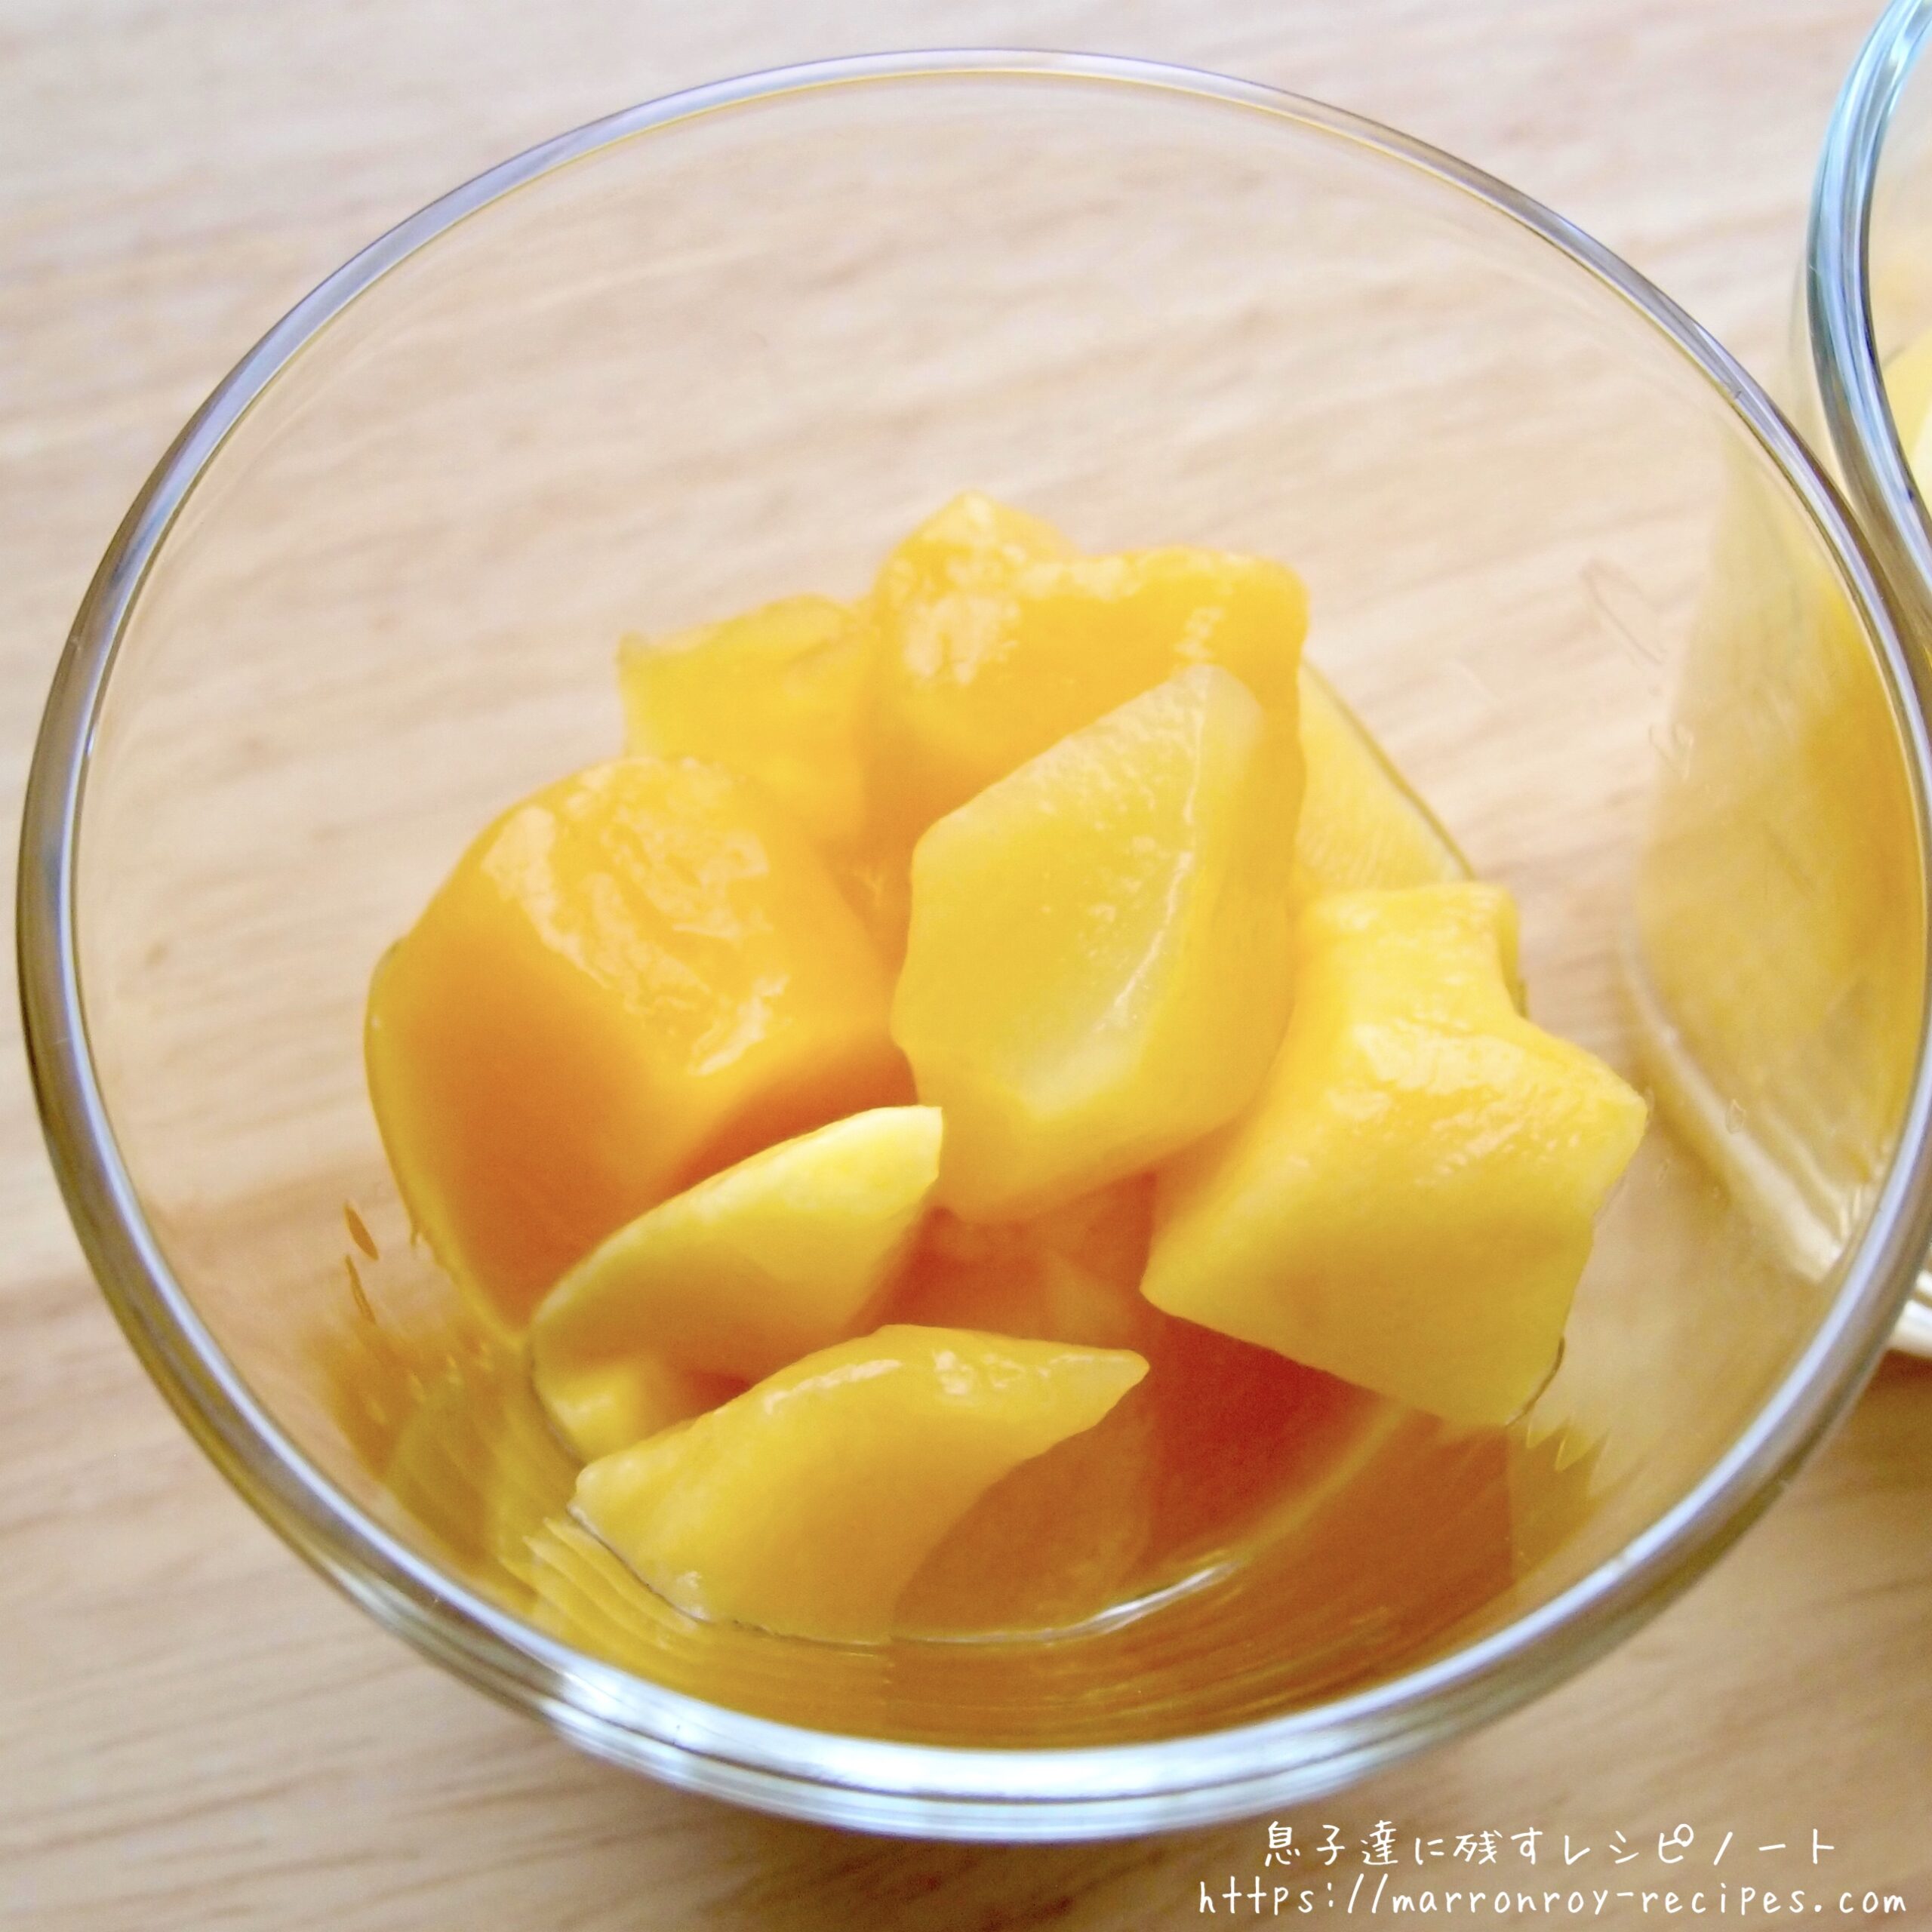 mango glass